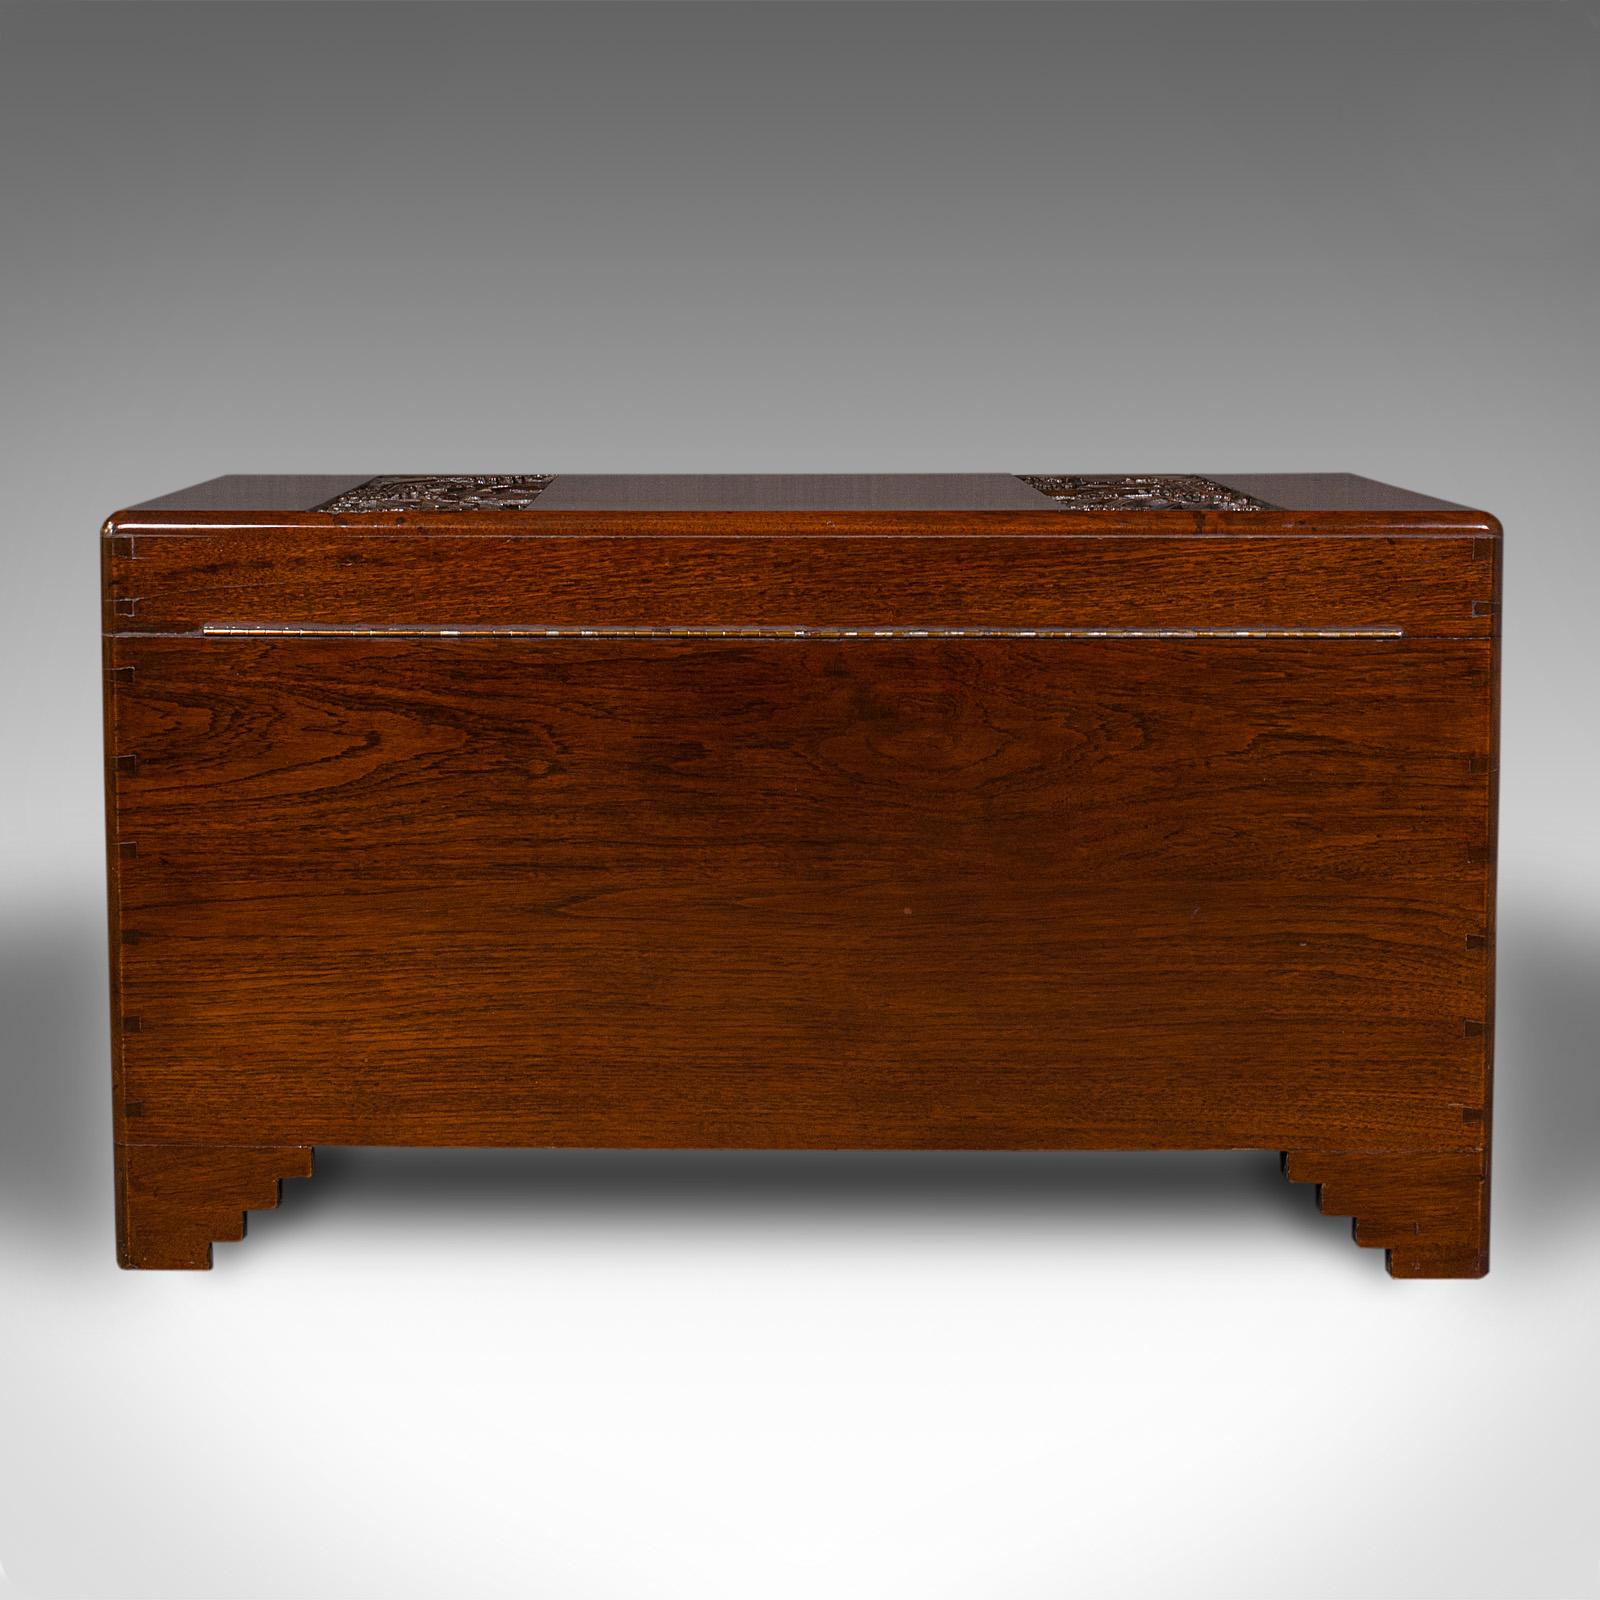 Wood Large Vintage Carved Chest, Oriental, Camphorwood, Linen Trunk, Art Deco, C.1940